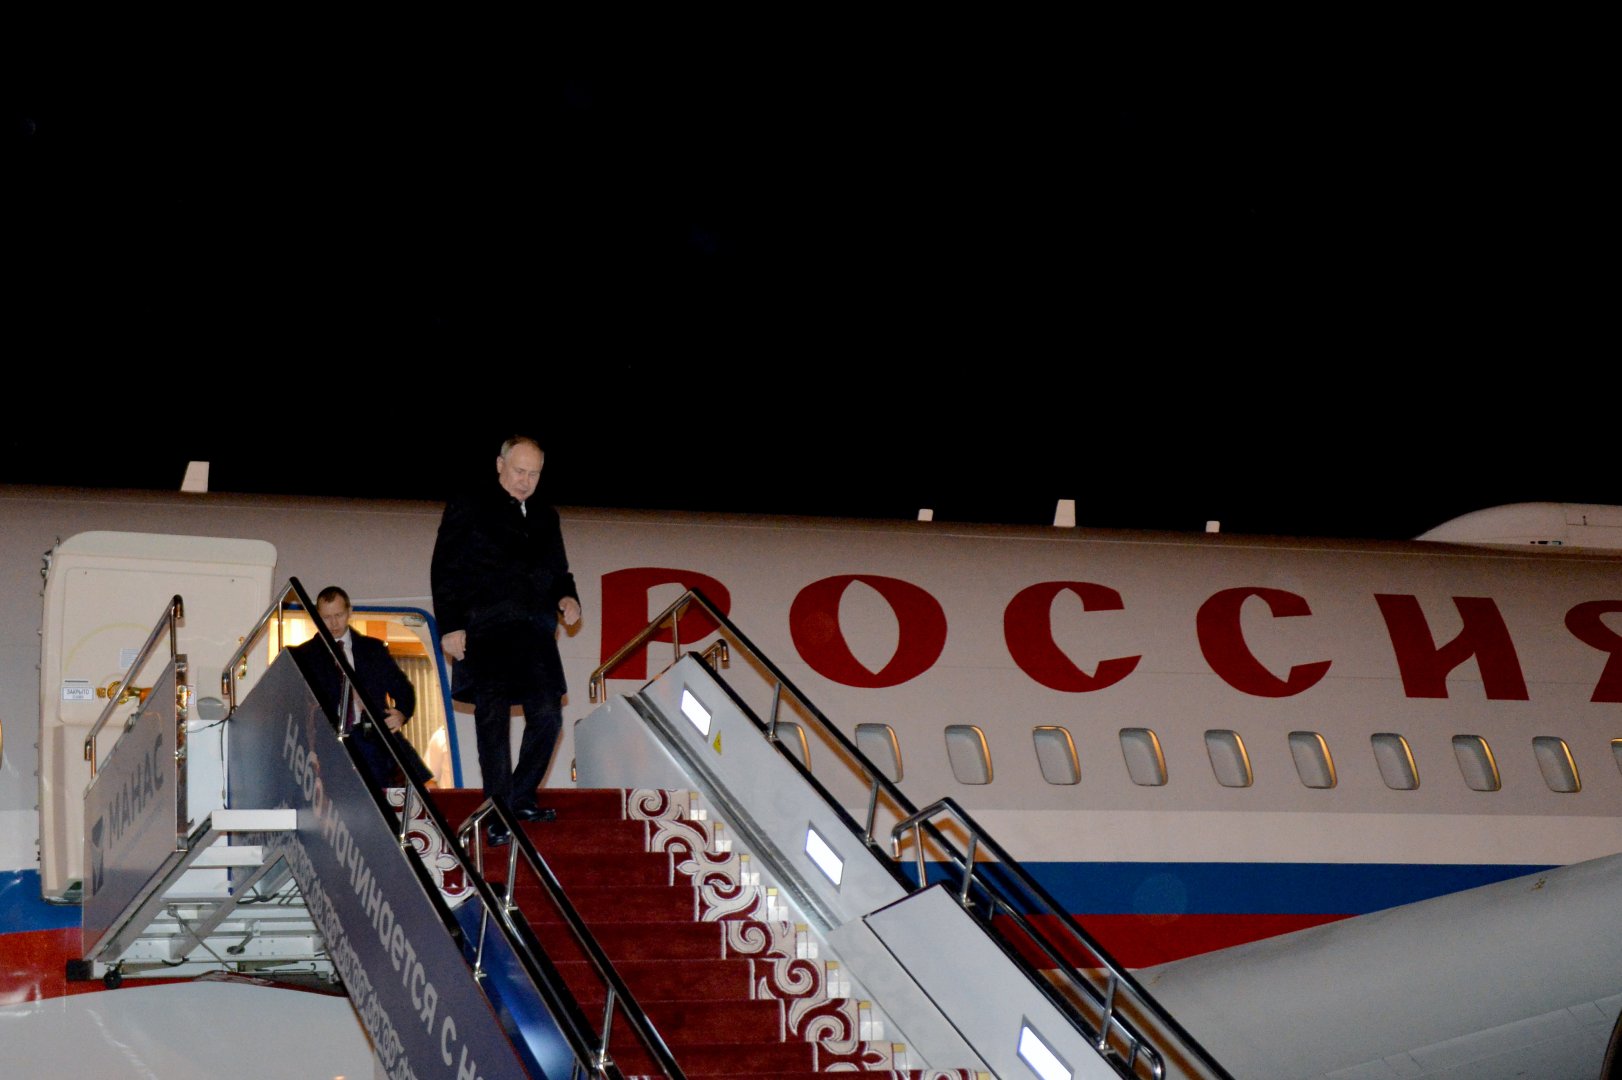 Vladimir Putin arrives in Kyrgyzstan